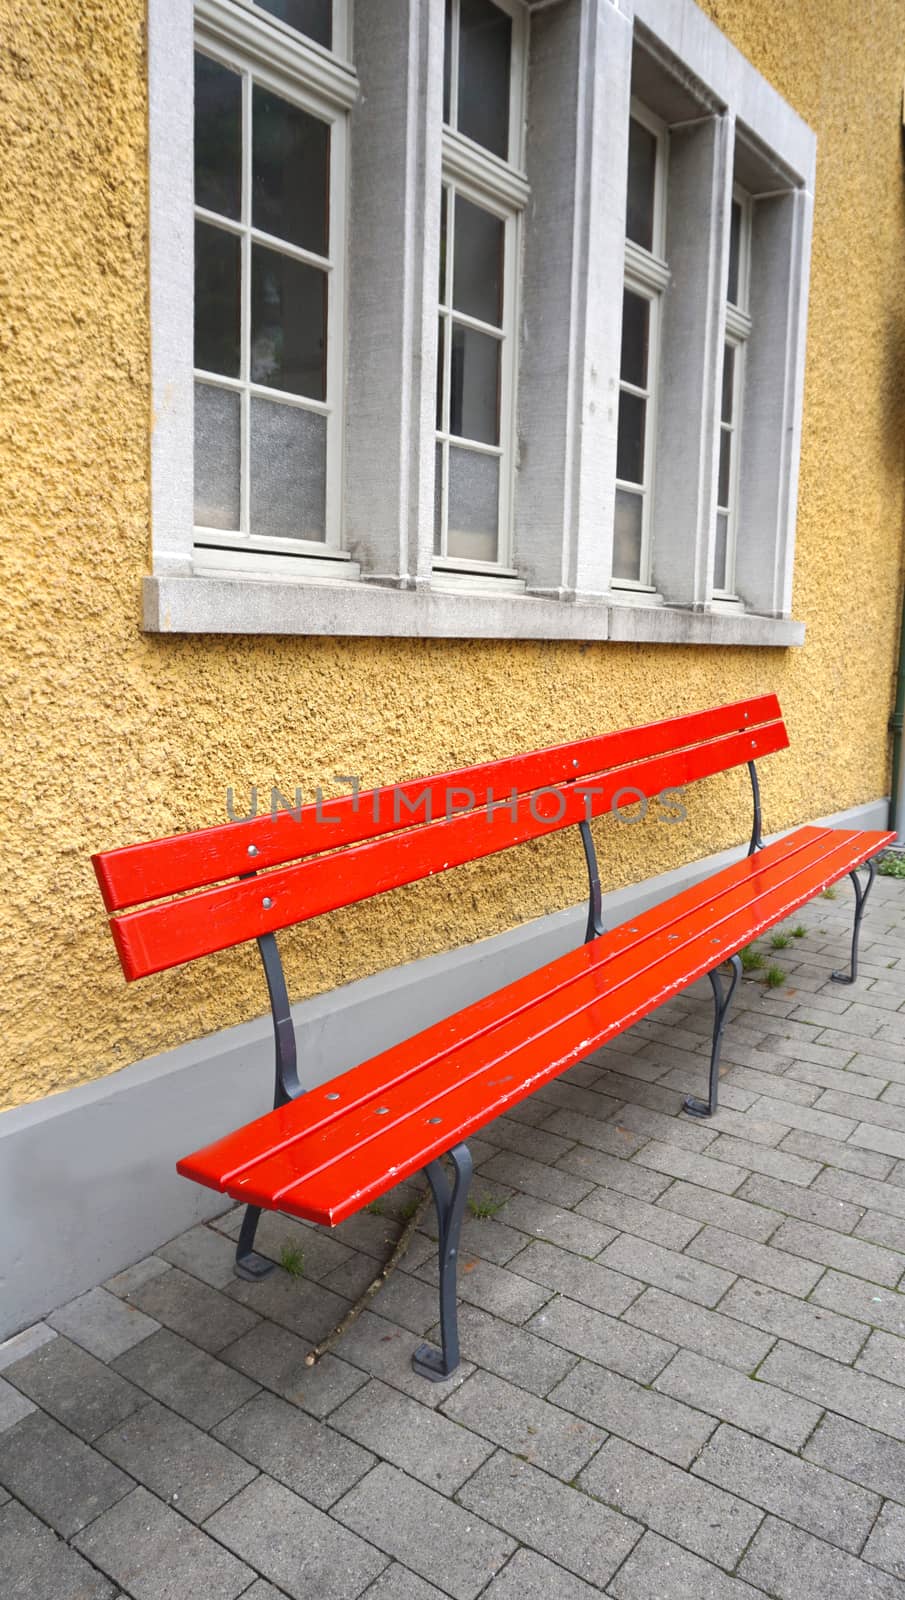 Seating area at Train station Vitznau, Lucerne,  Switzerland